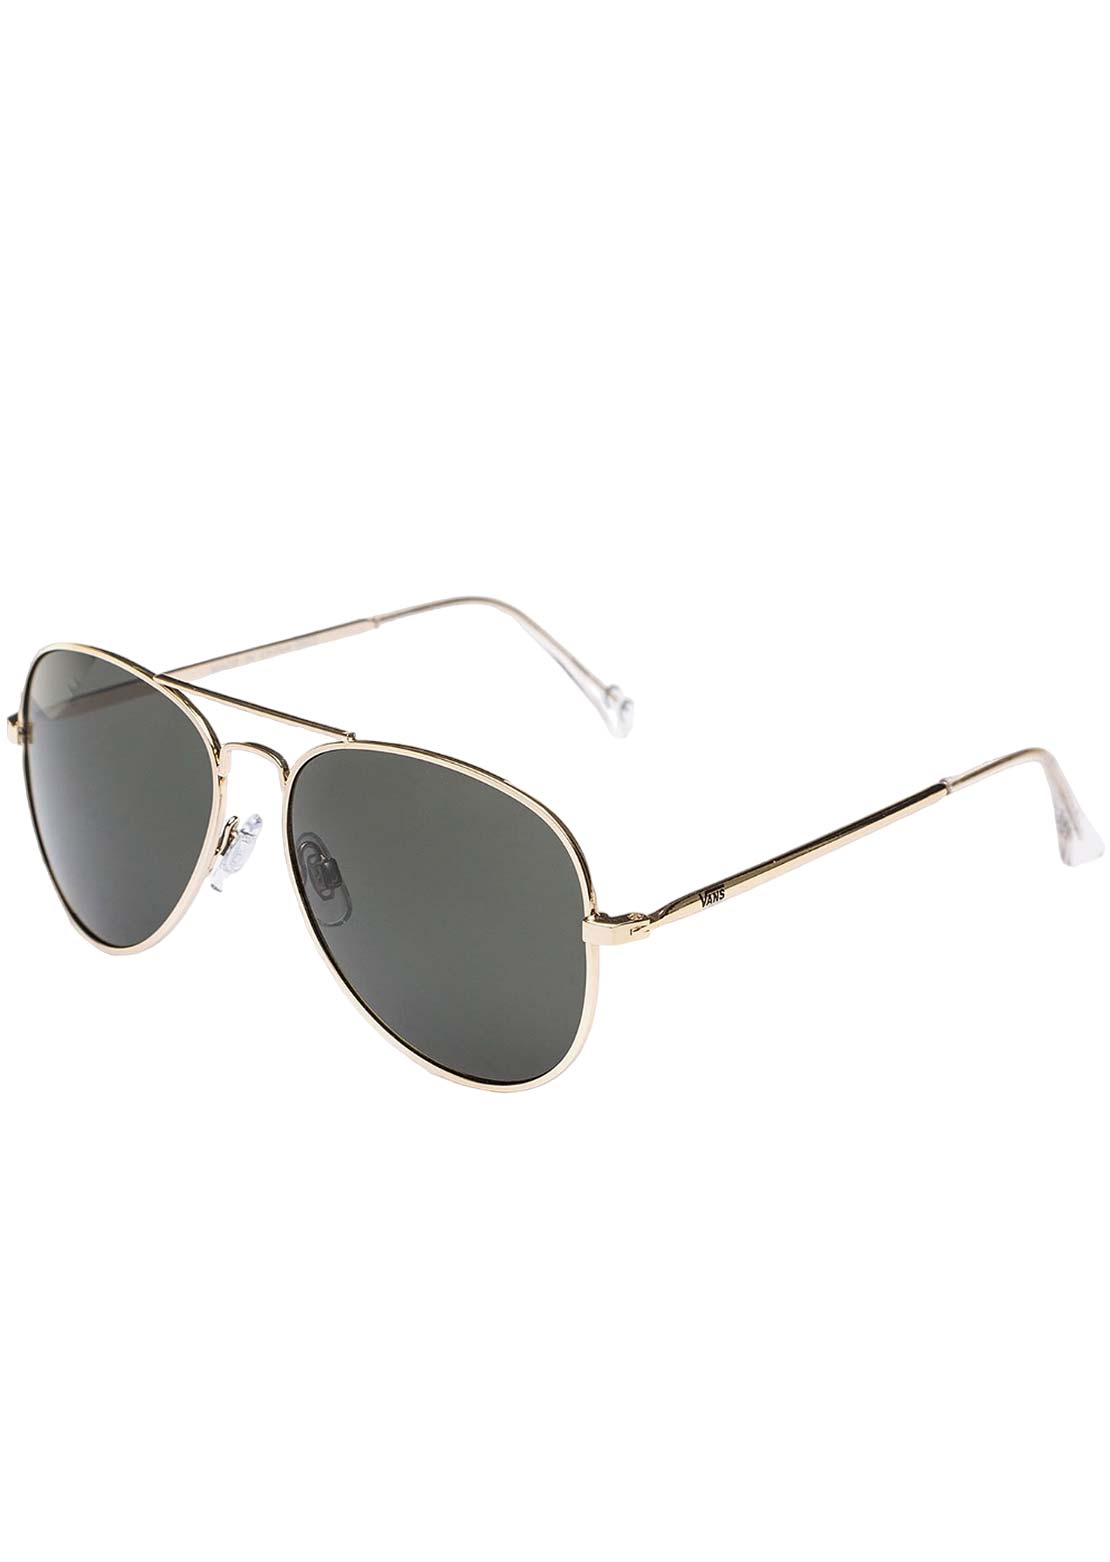 Vans Unisex Henderson Shades II Sunglasses Gold